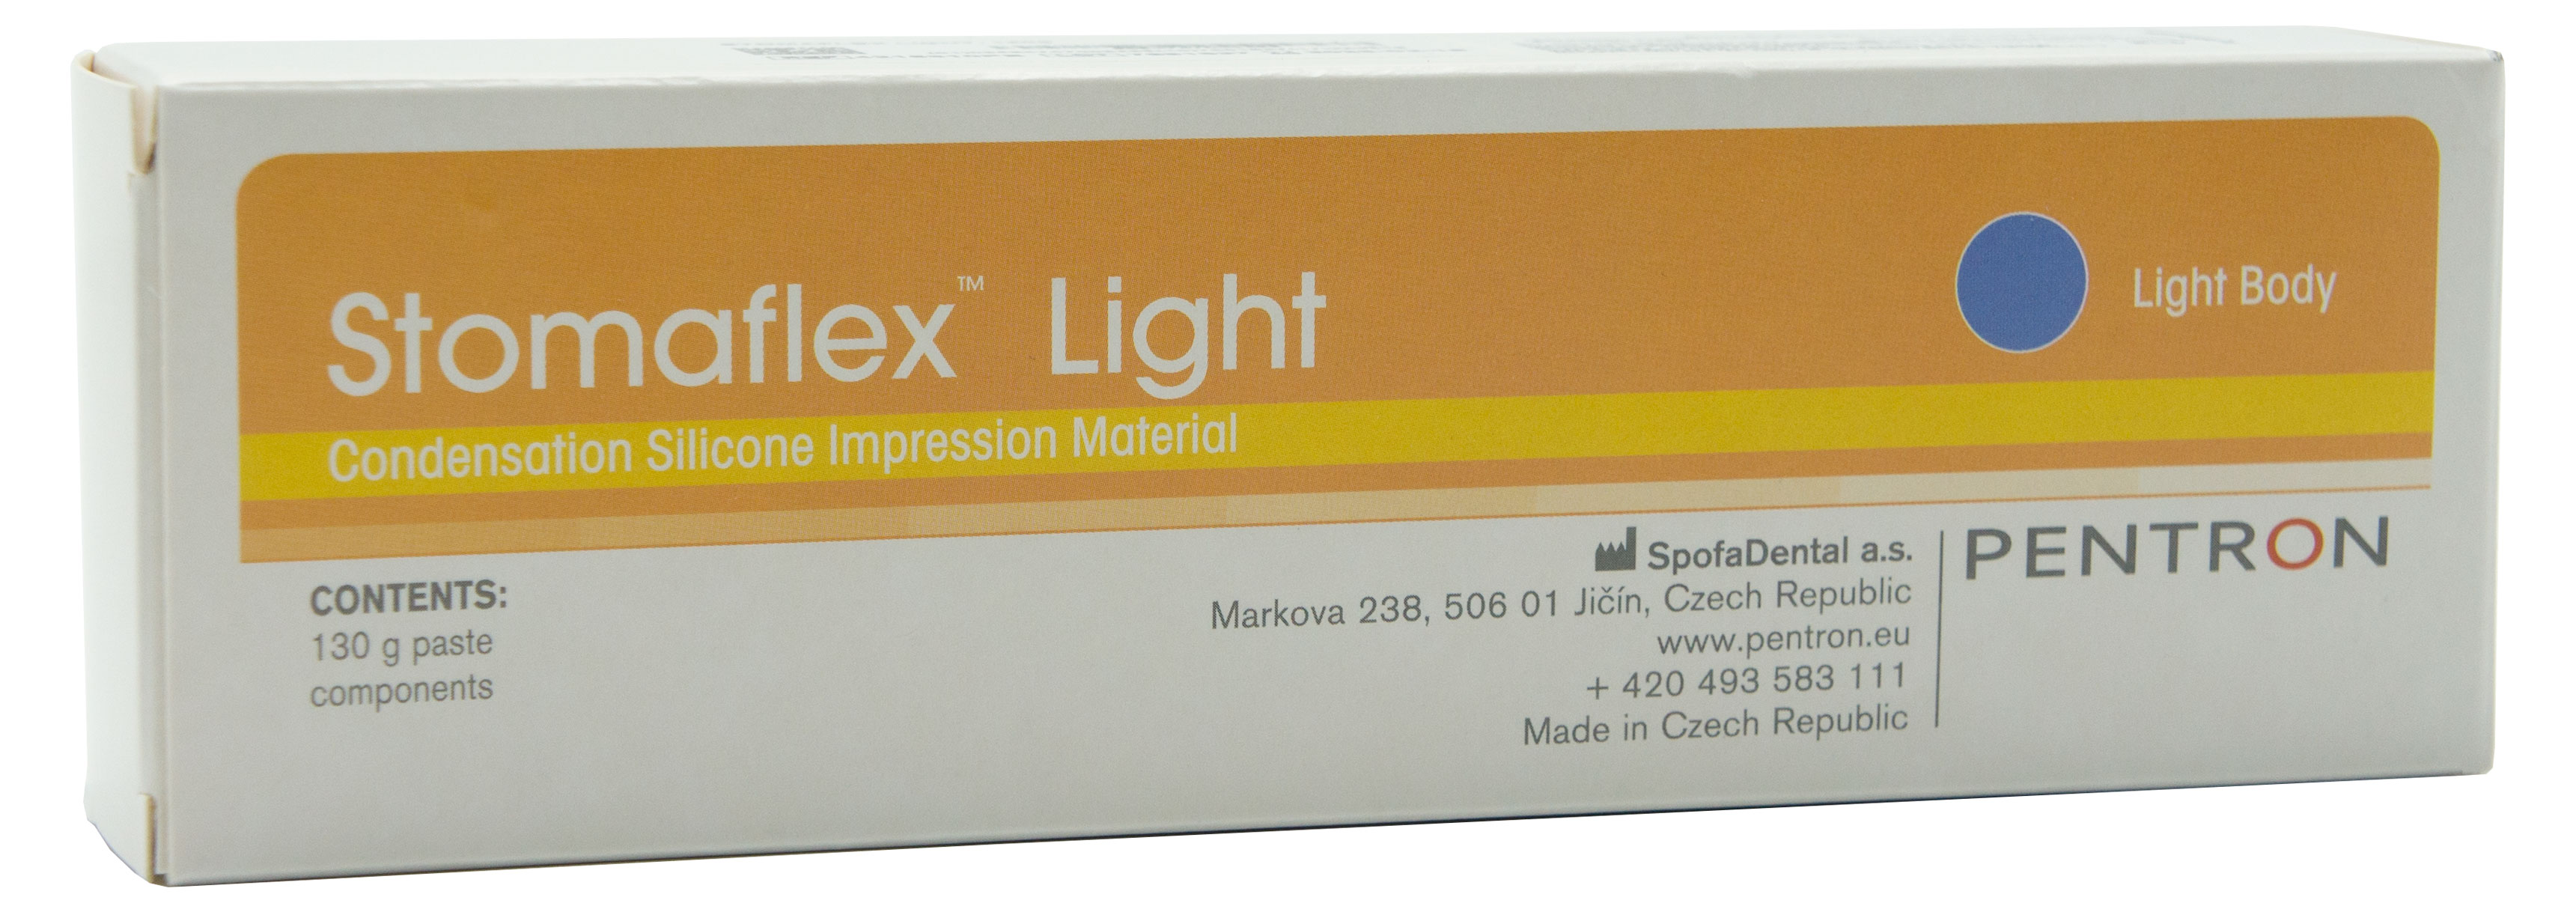 Stomaflex light